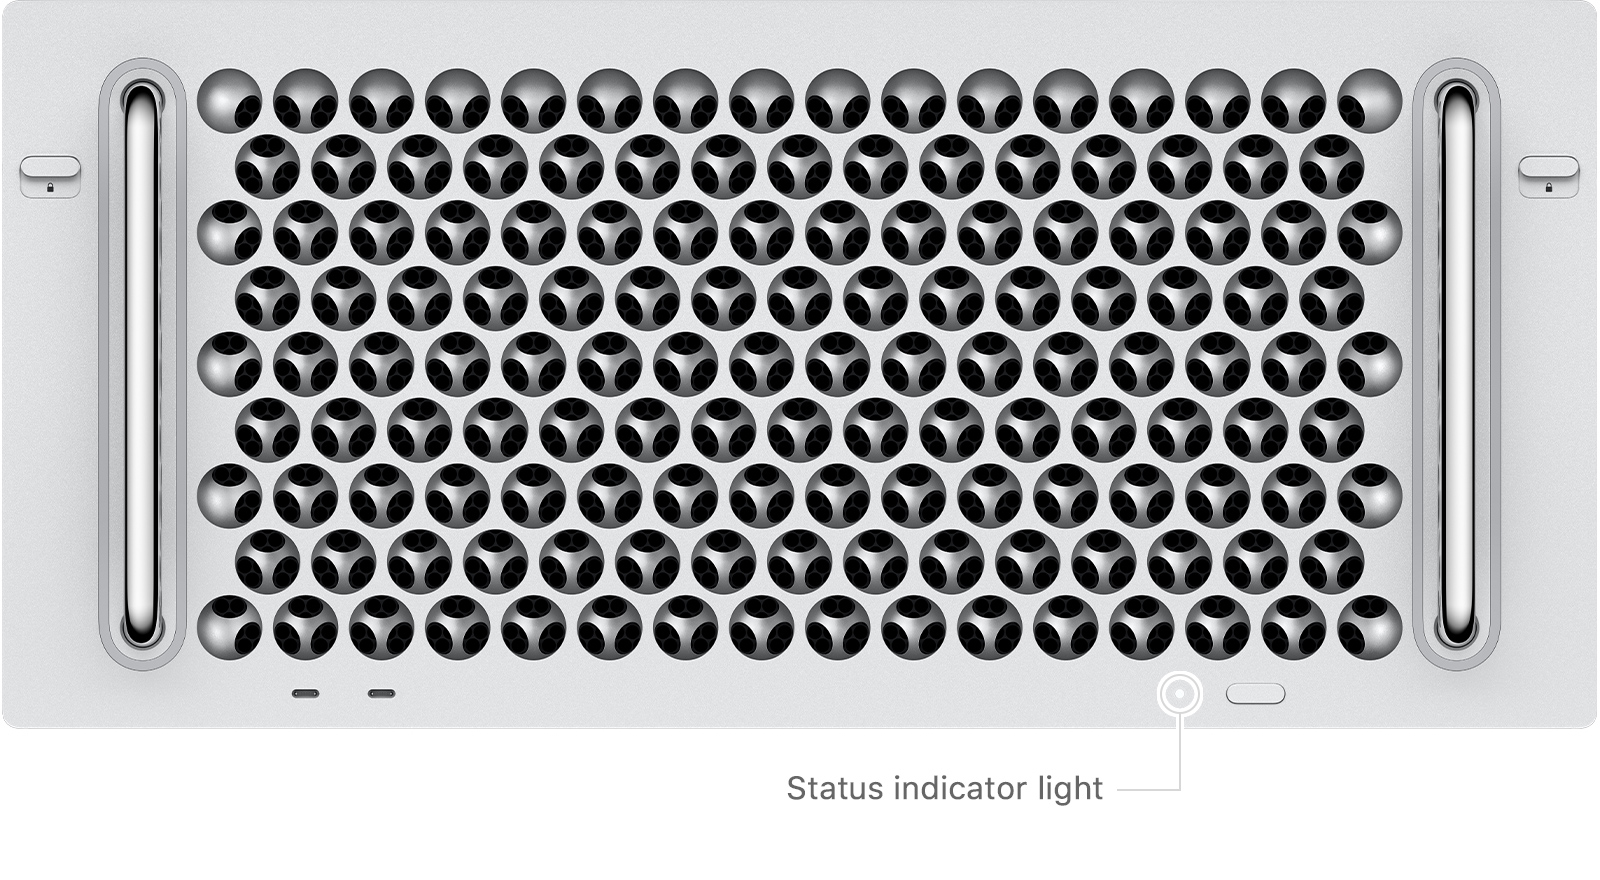 Mac Pro (2019) status indicator light behavior - Apple Support